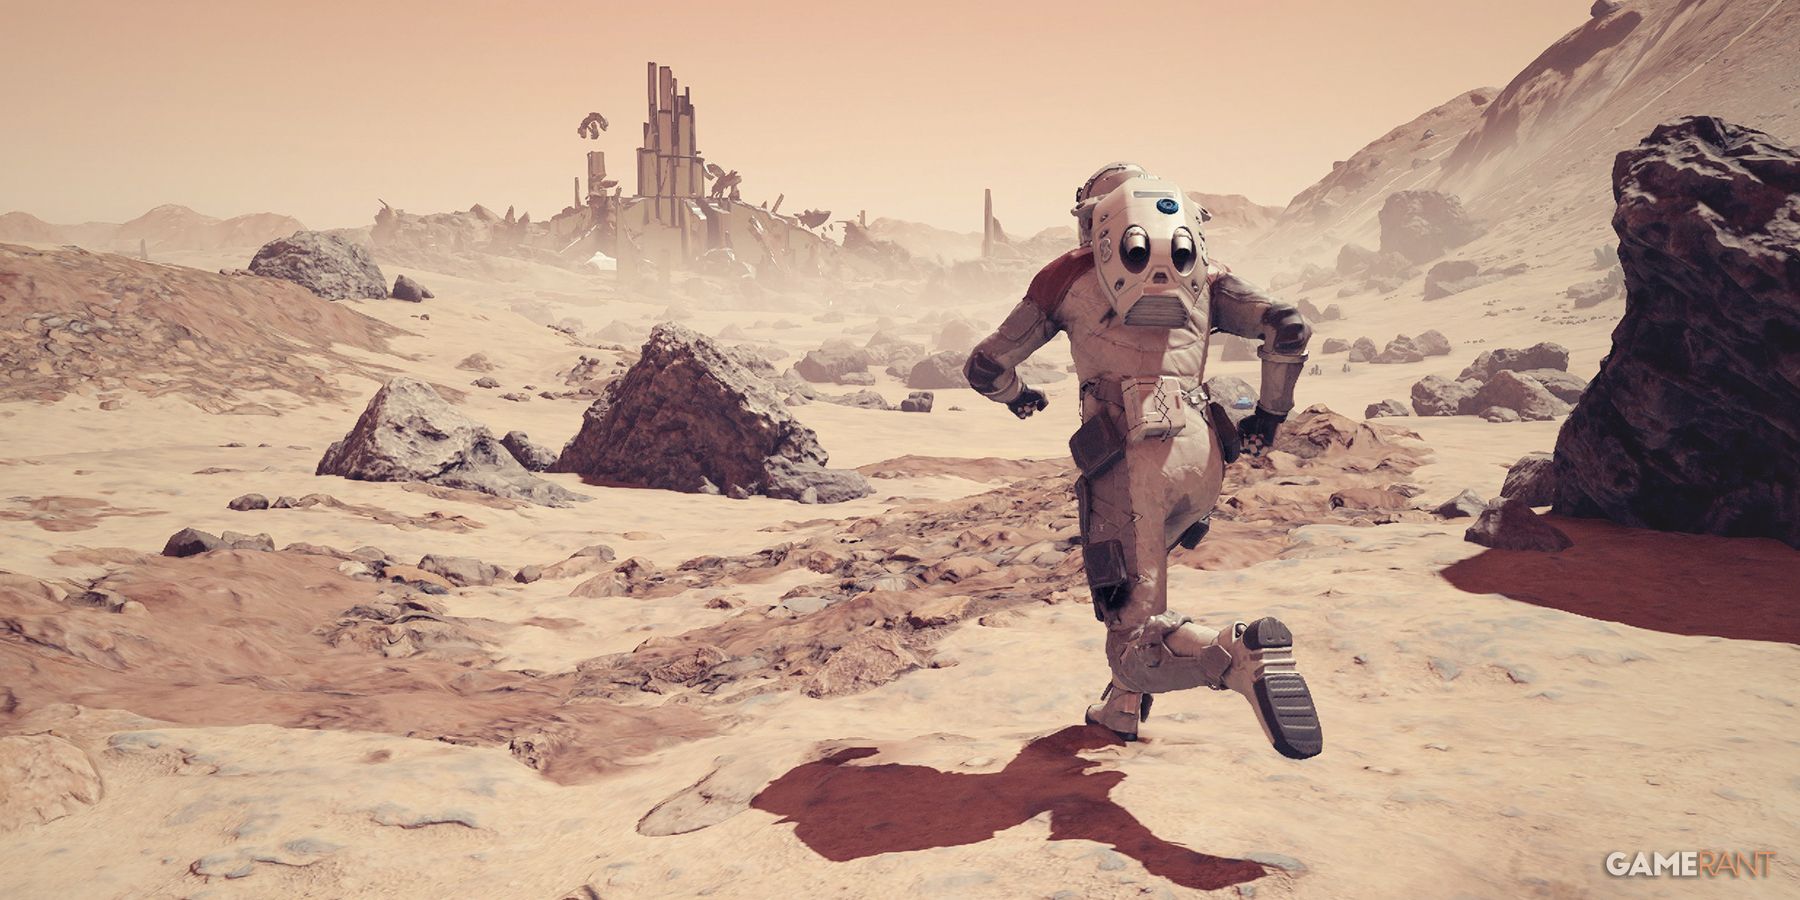 Starfield protagonist in space suit running toward desert planet temple